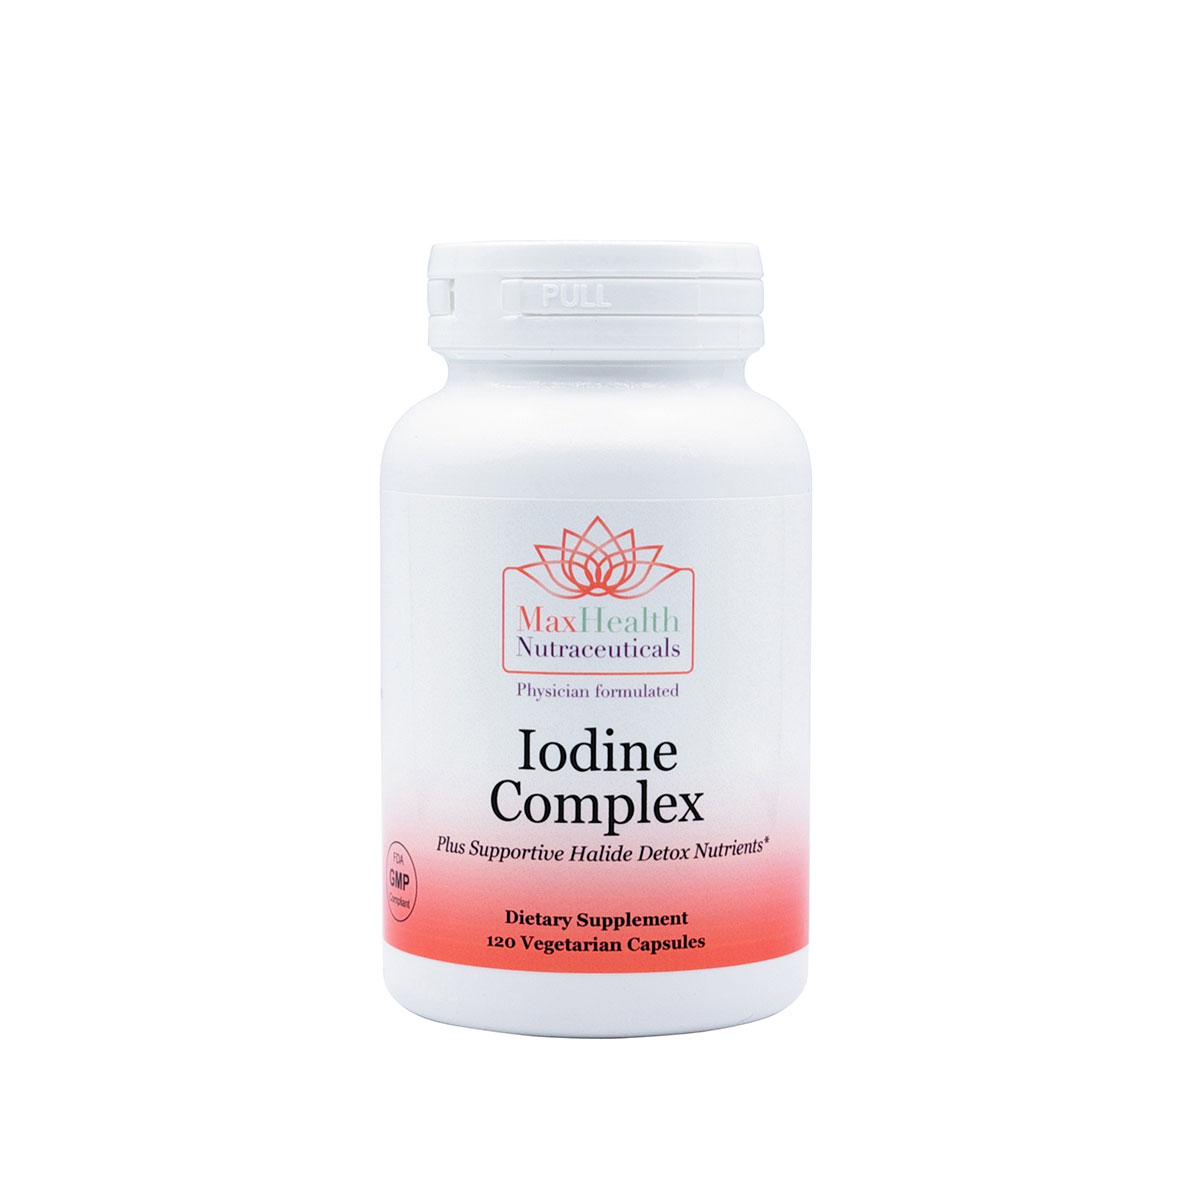 11Iodine Complex Plus Supportive Halide Detox Nutrients